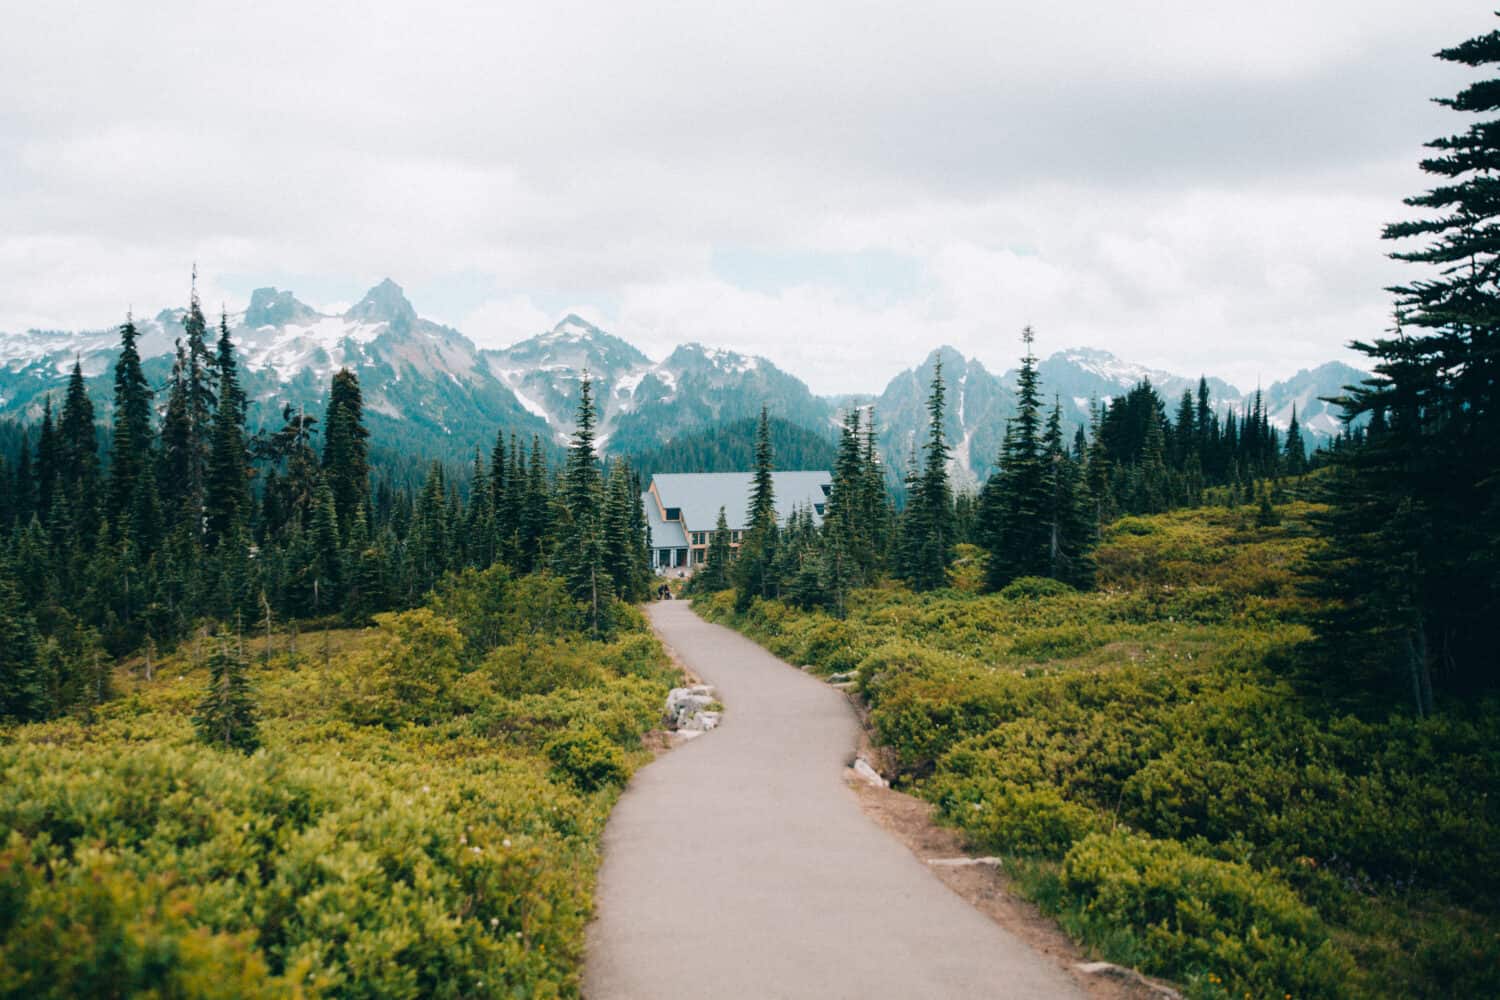 Fun Facts About Mount Rainier National Park